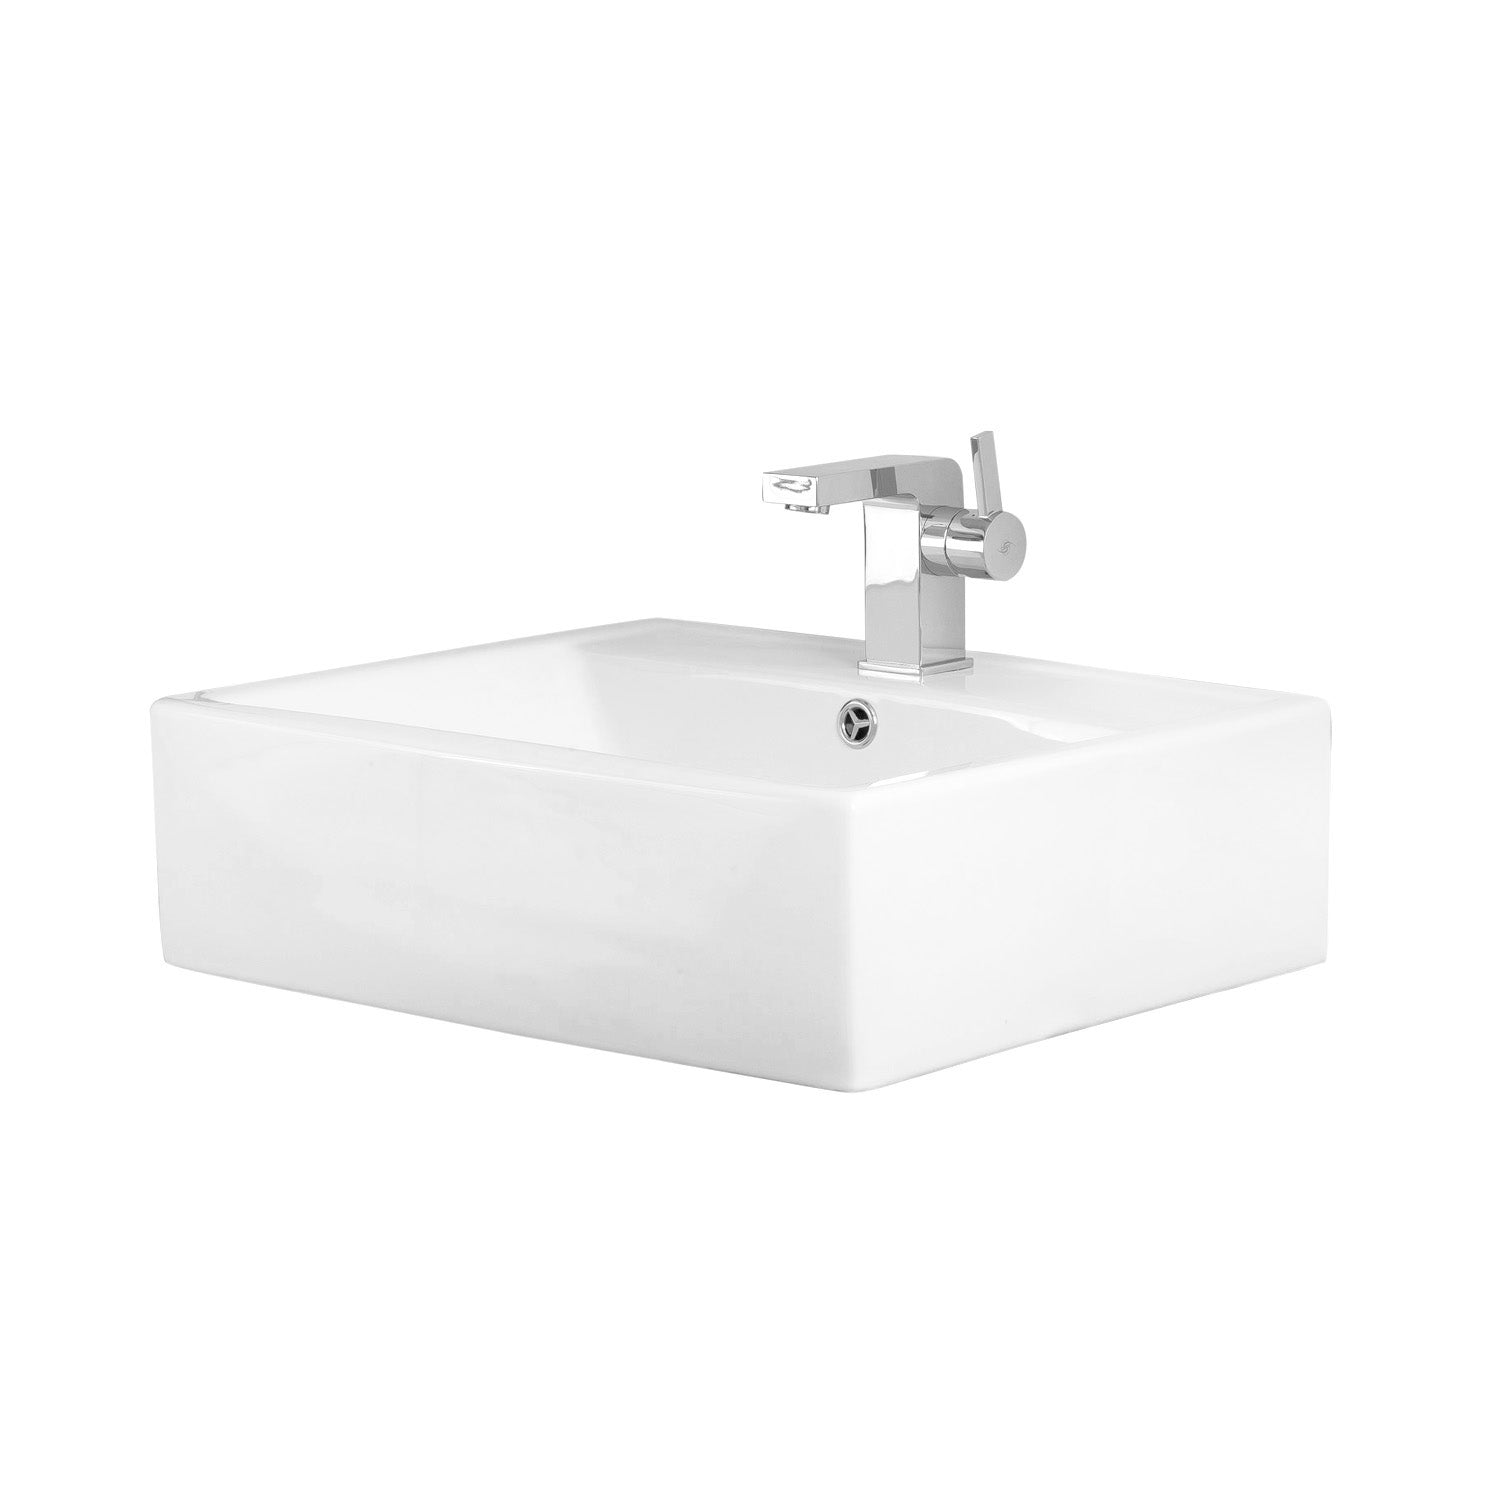 DAX Ceramic Rectangle Single Bowl Bathroom Vessel Sink, White Finish, 20-1/8 x 17-1/4 x 6 Inches (BSN-241)